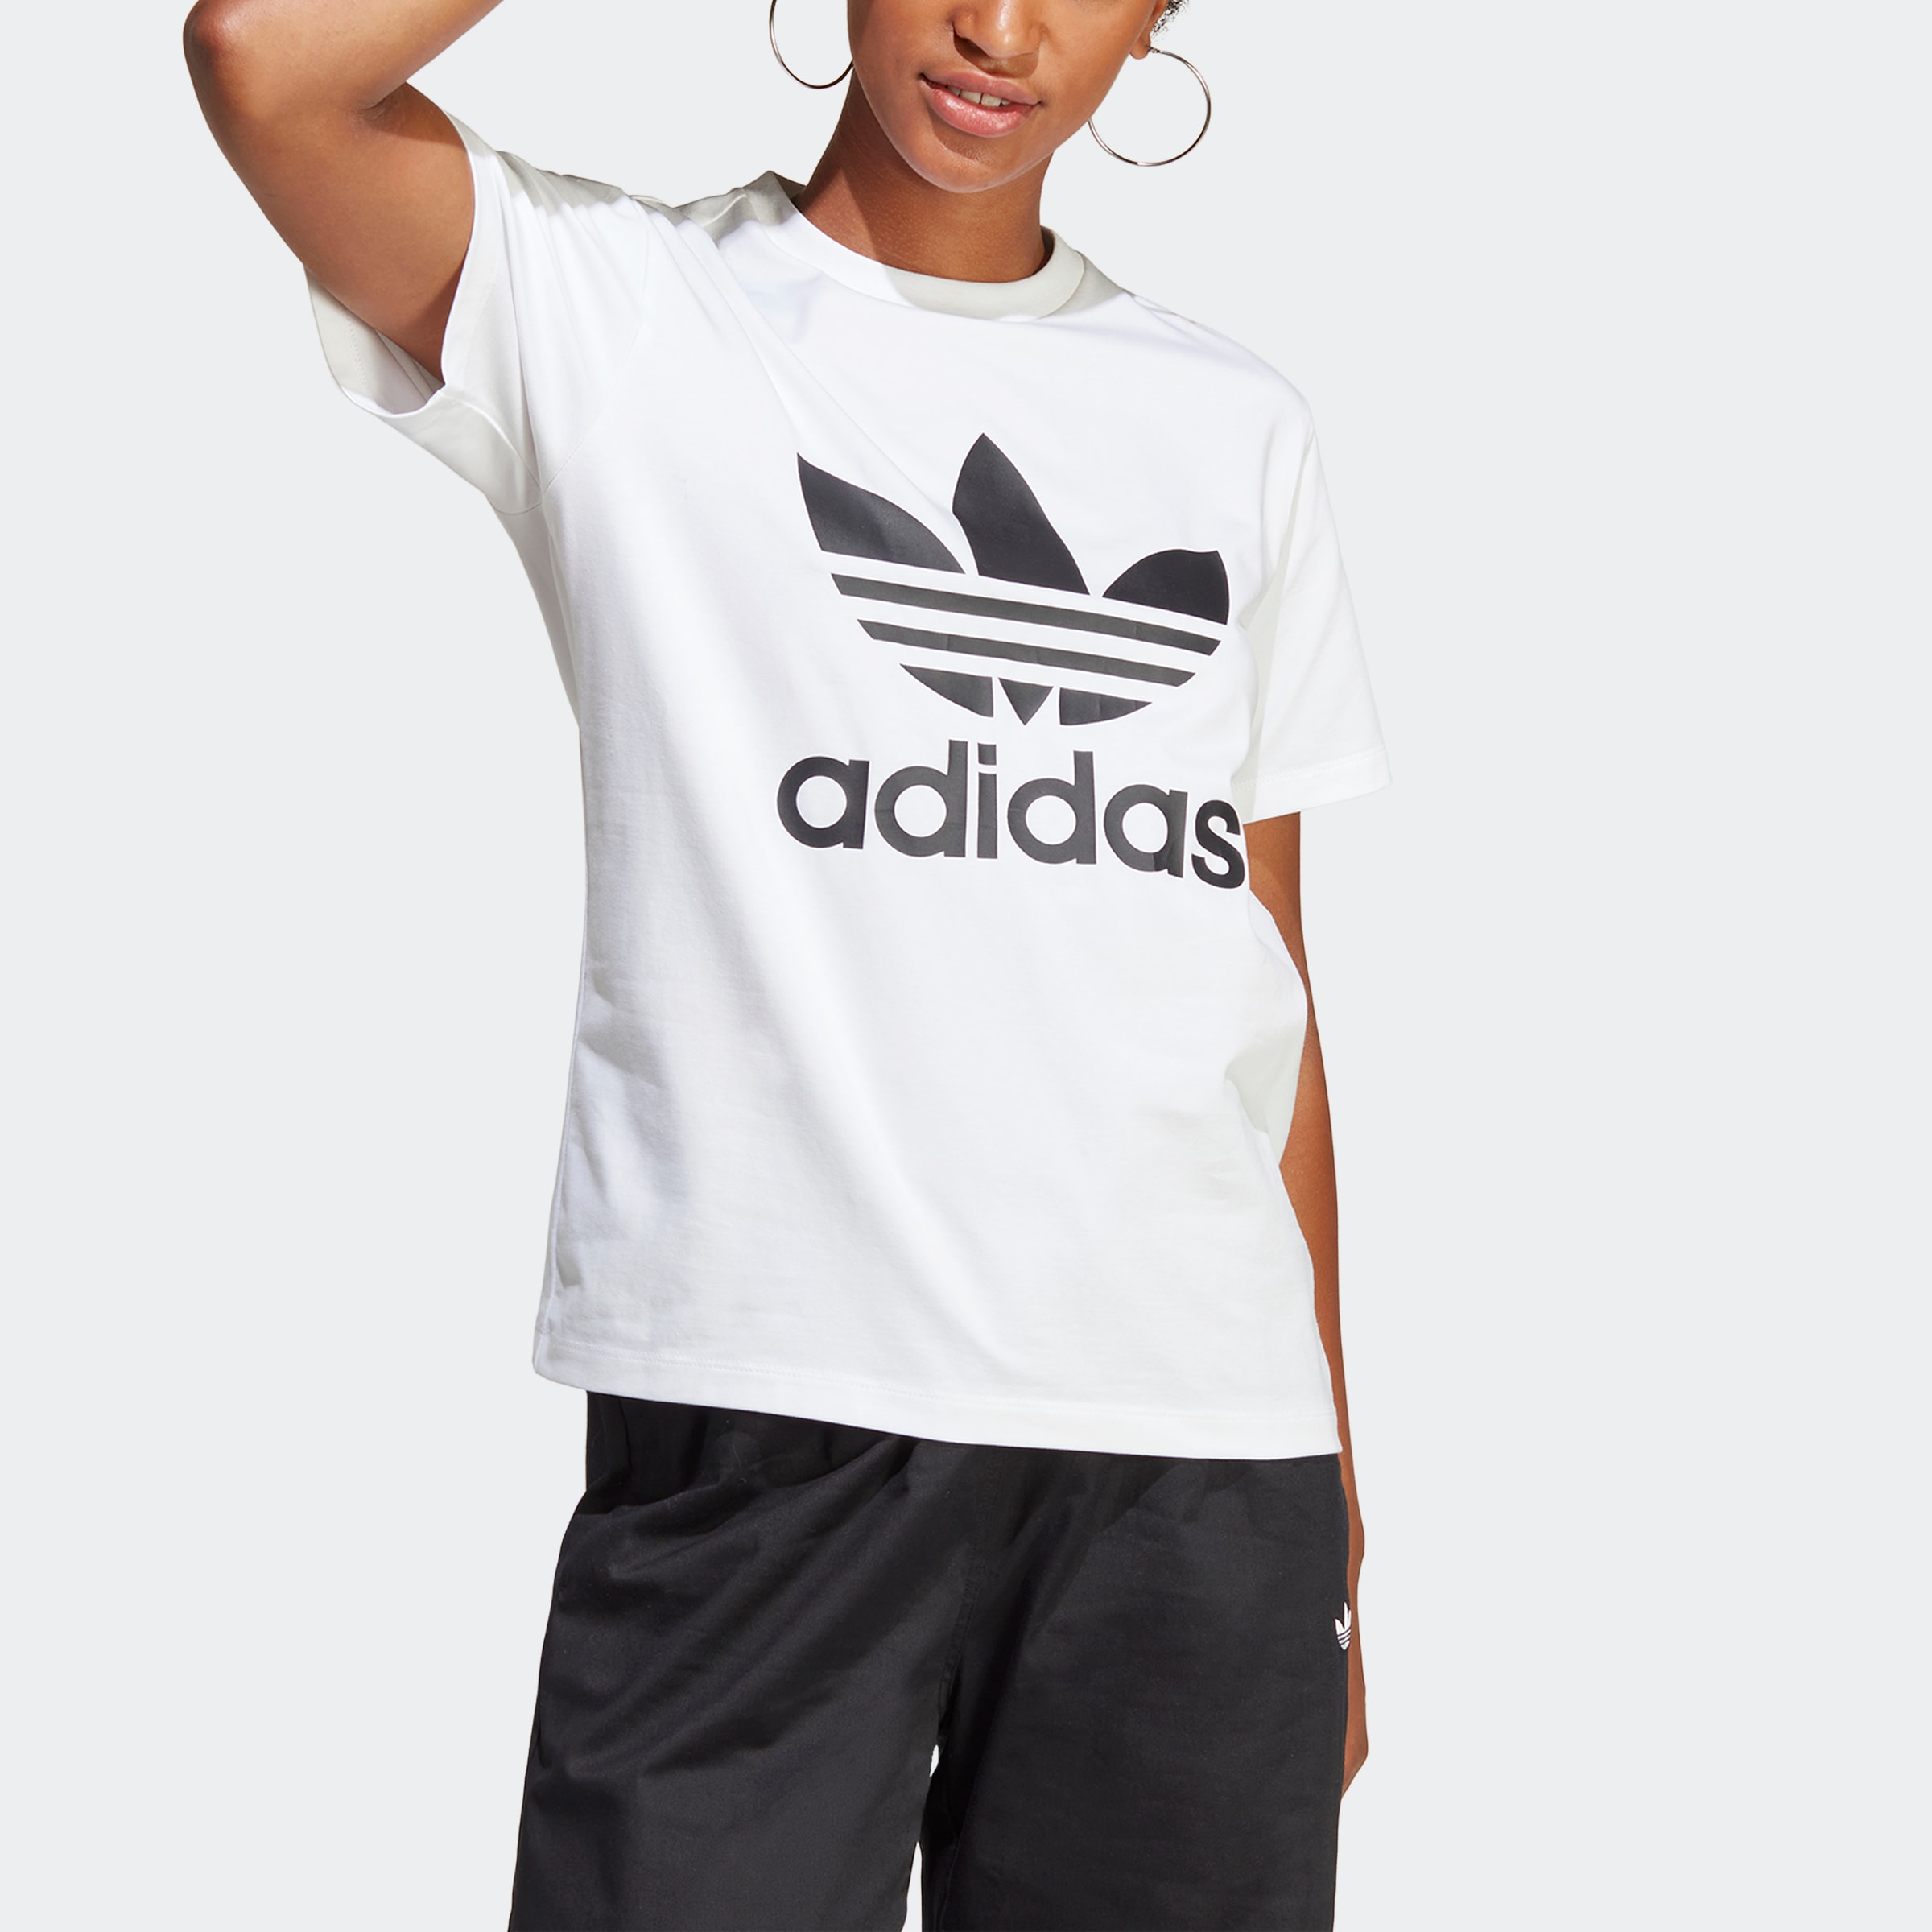 adidas Women's Trefoil Tee T-Shirt, White, Large